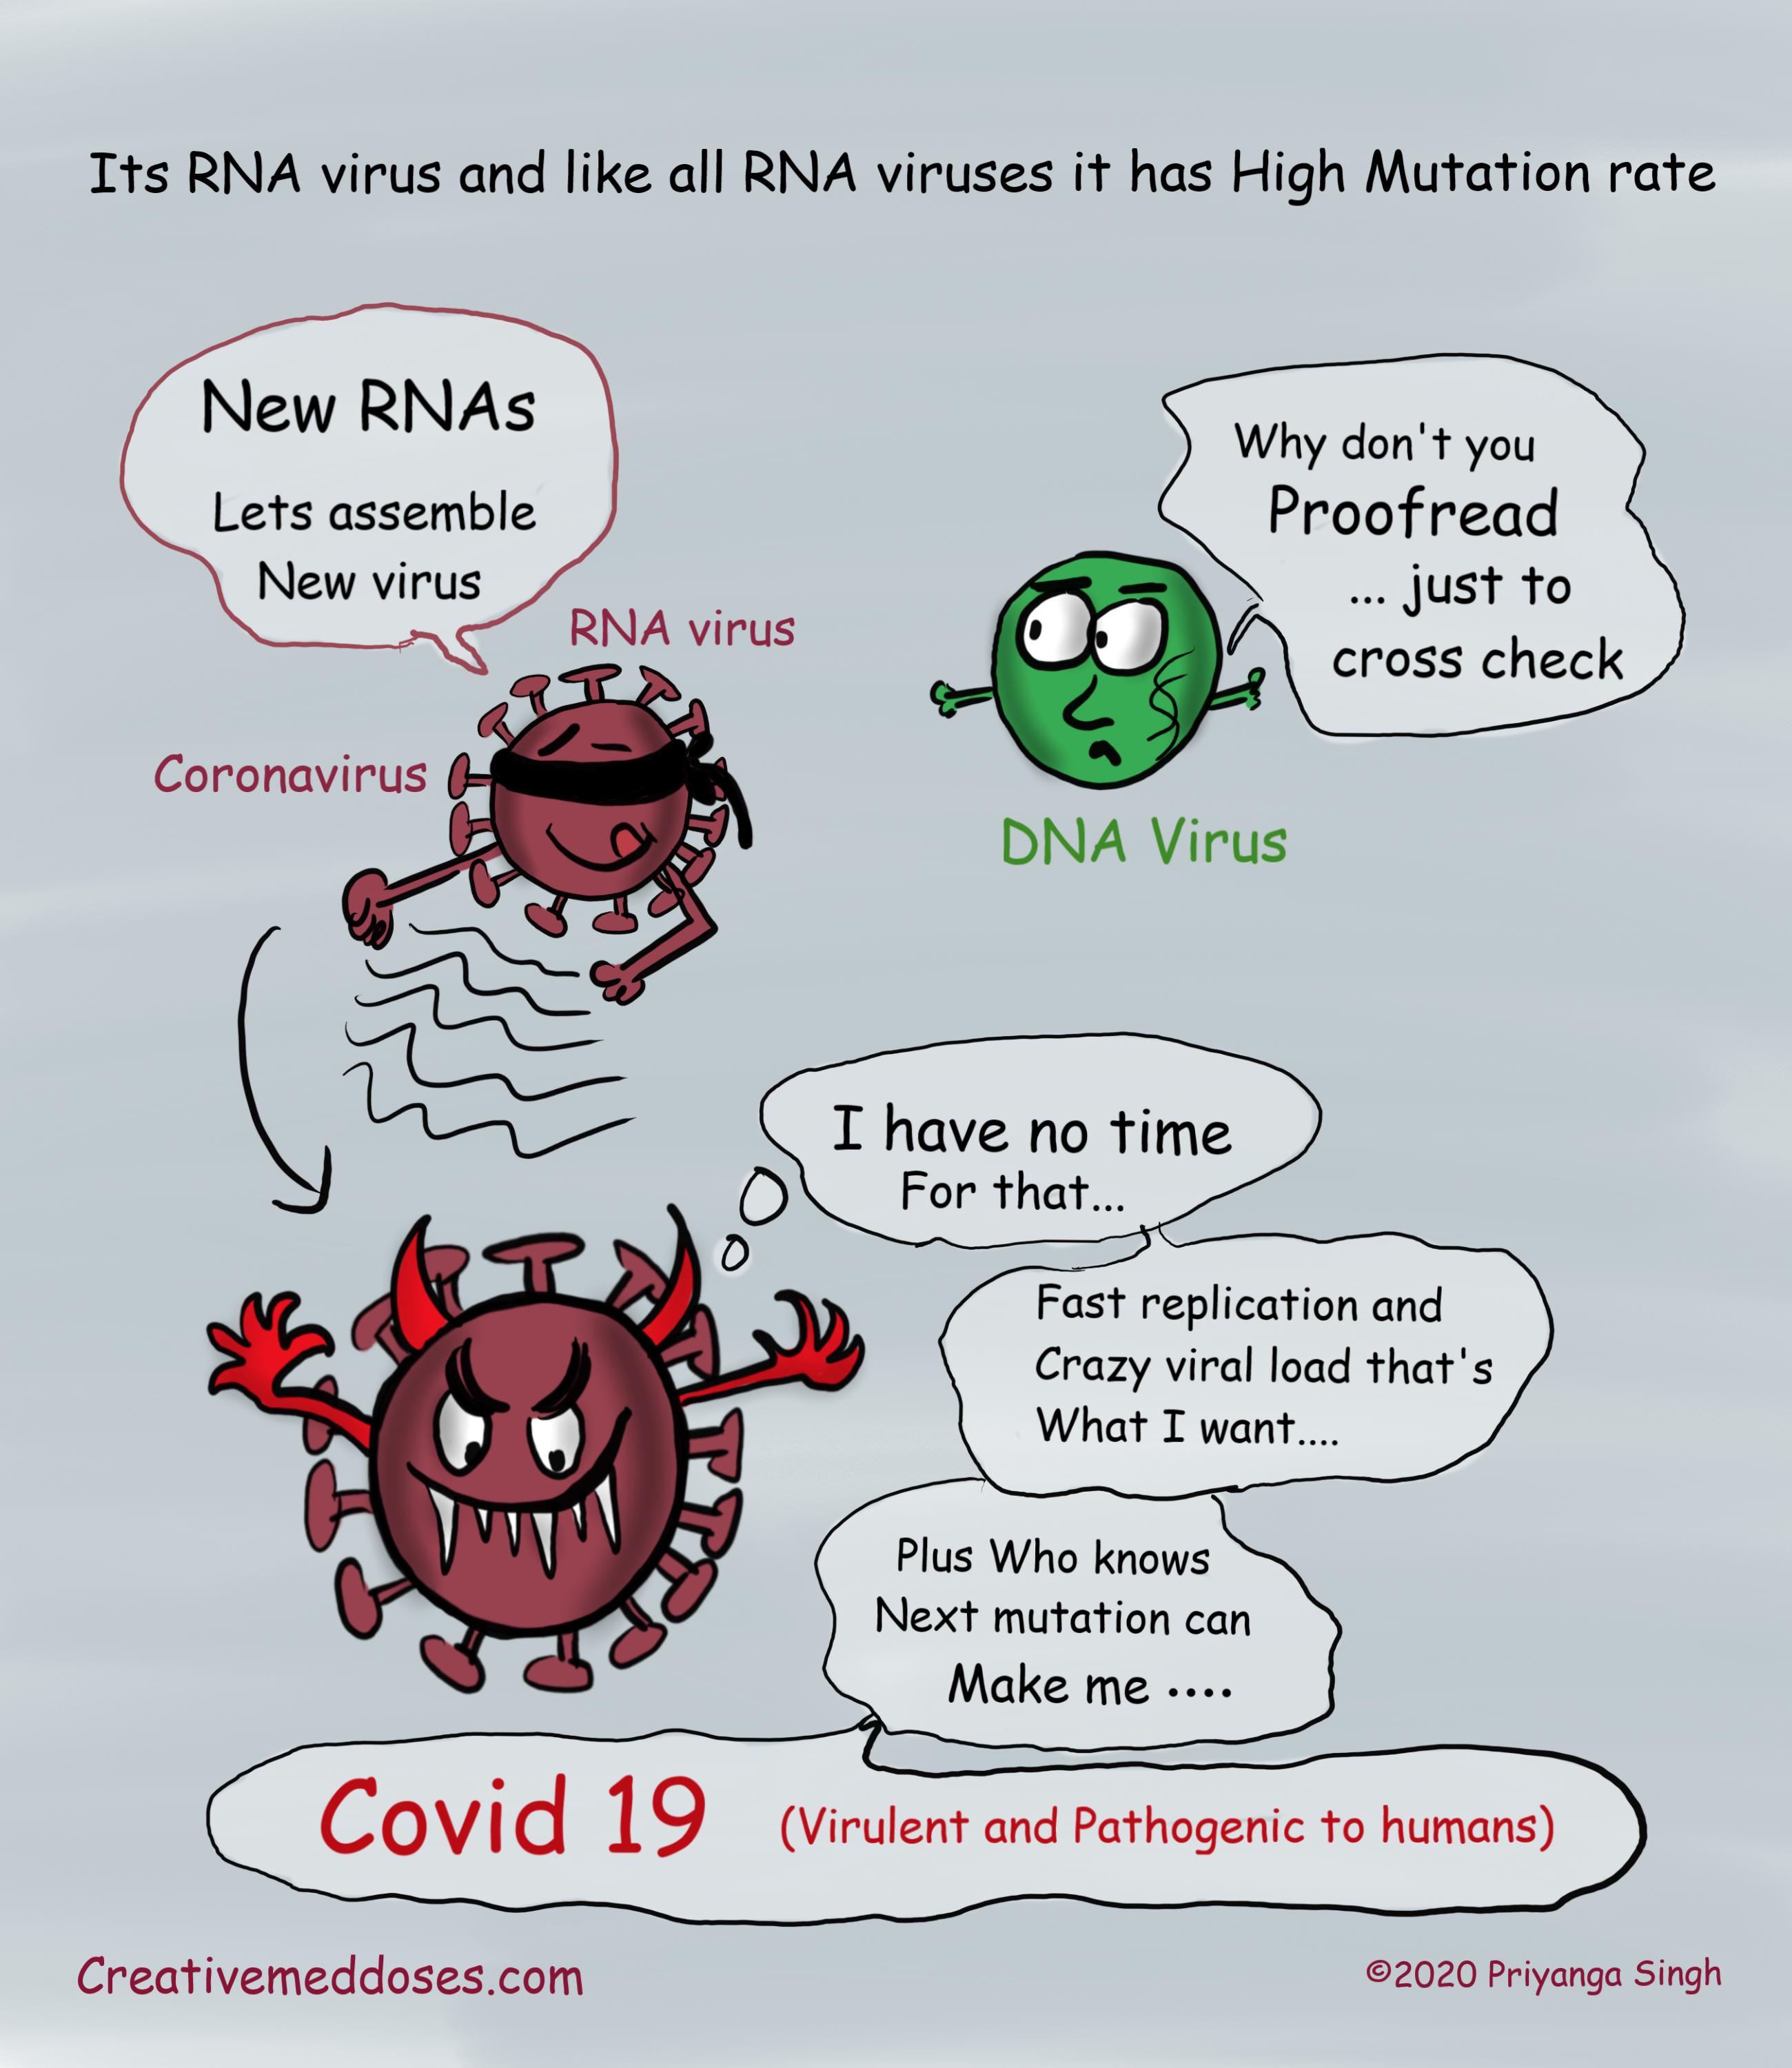 high mutation rate of RNA virus jpg.jpg